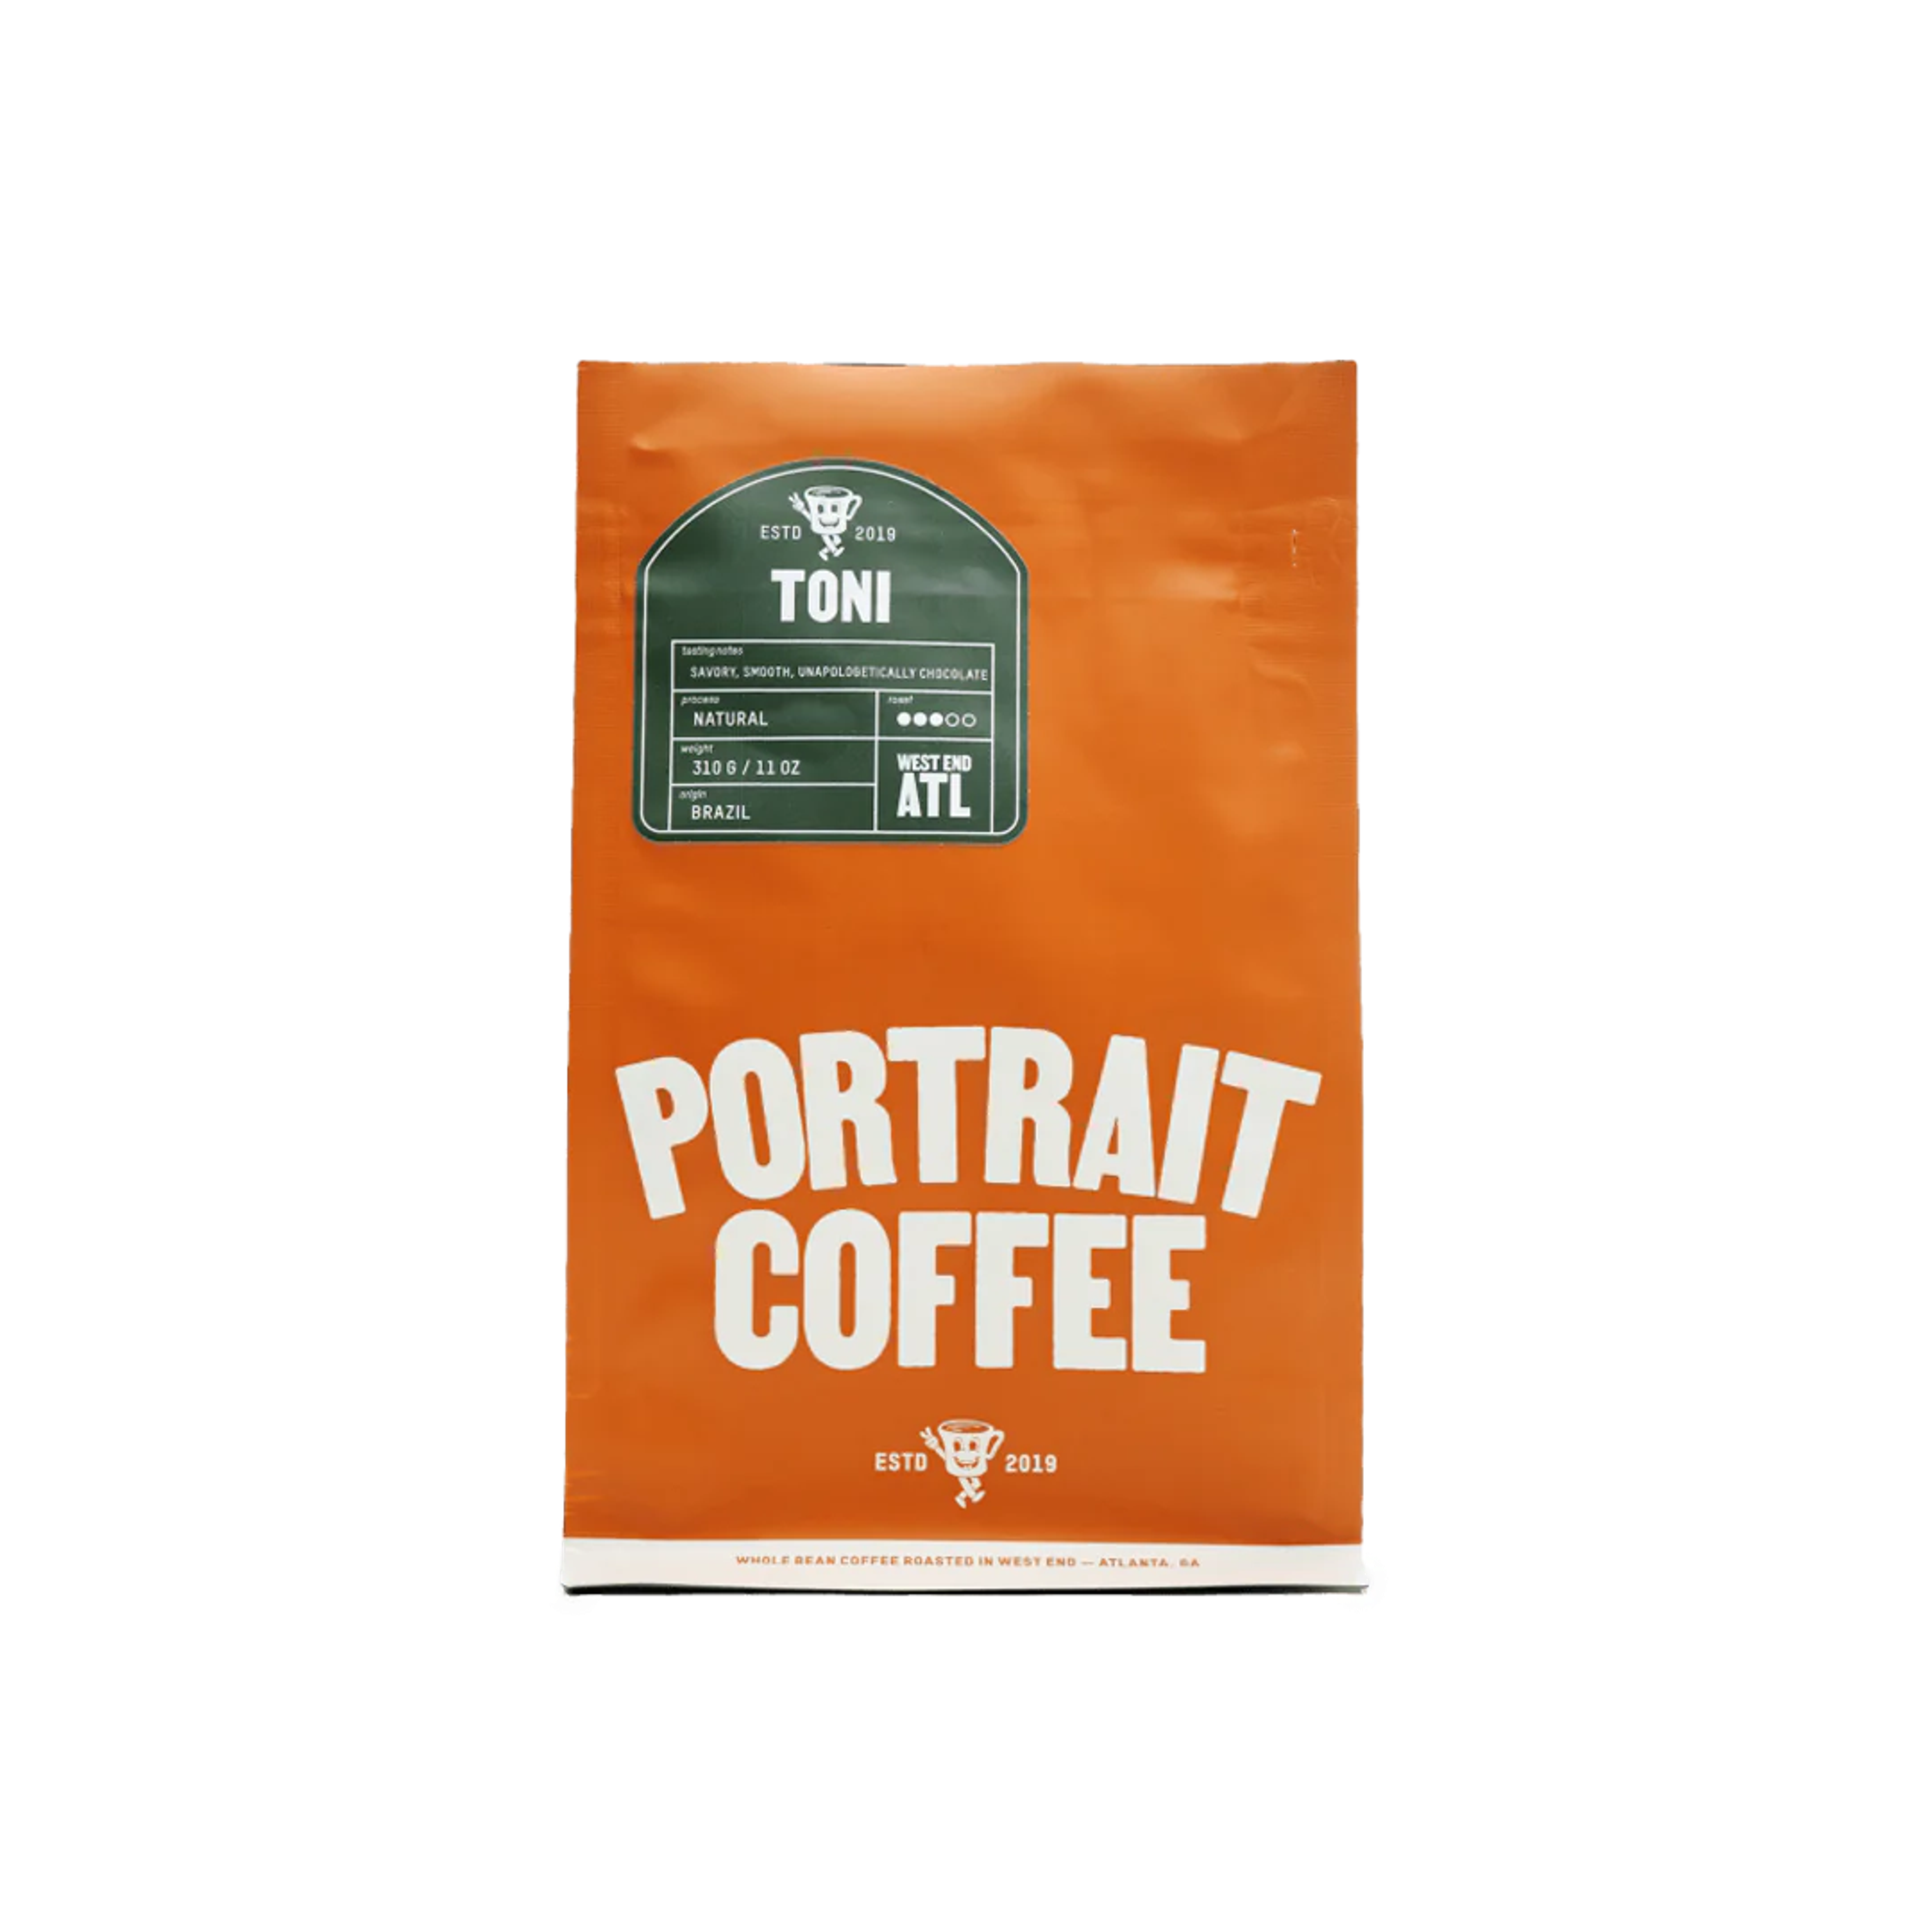 TONI – Portrait Coffee